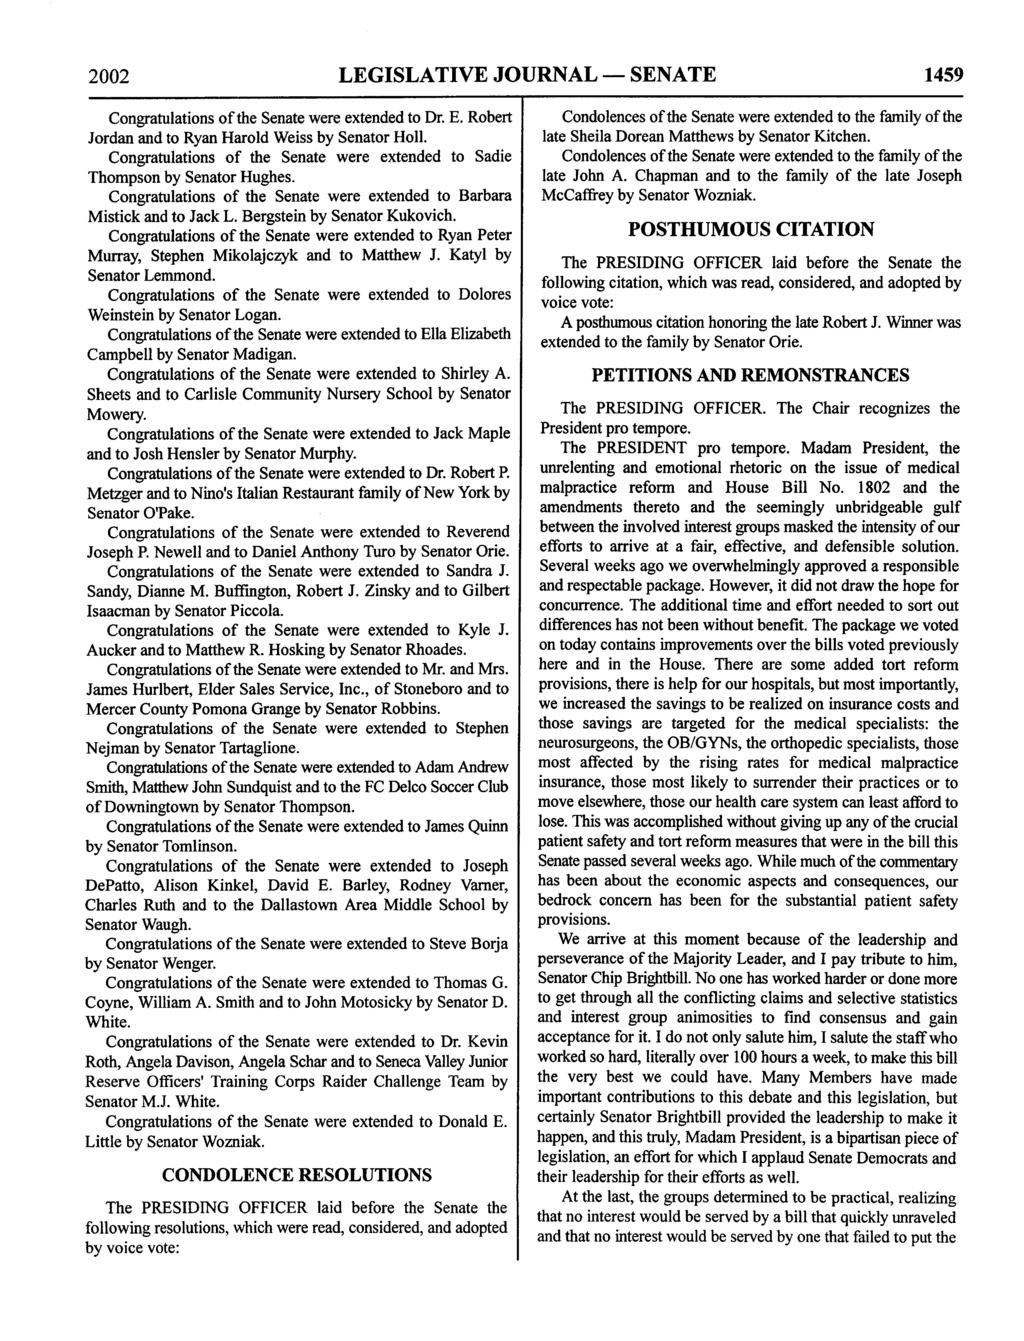 2002 LEGISLATIVE JOURNAL SENATE 1459 Congratulations of the Senate were extended to Dr. E. Robert Jordan and to Ryan Harold Weiss by Senator Holl.